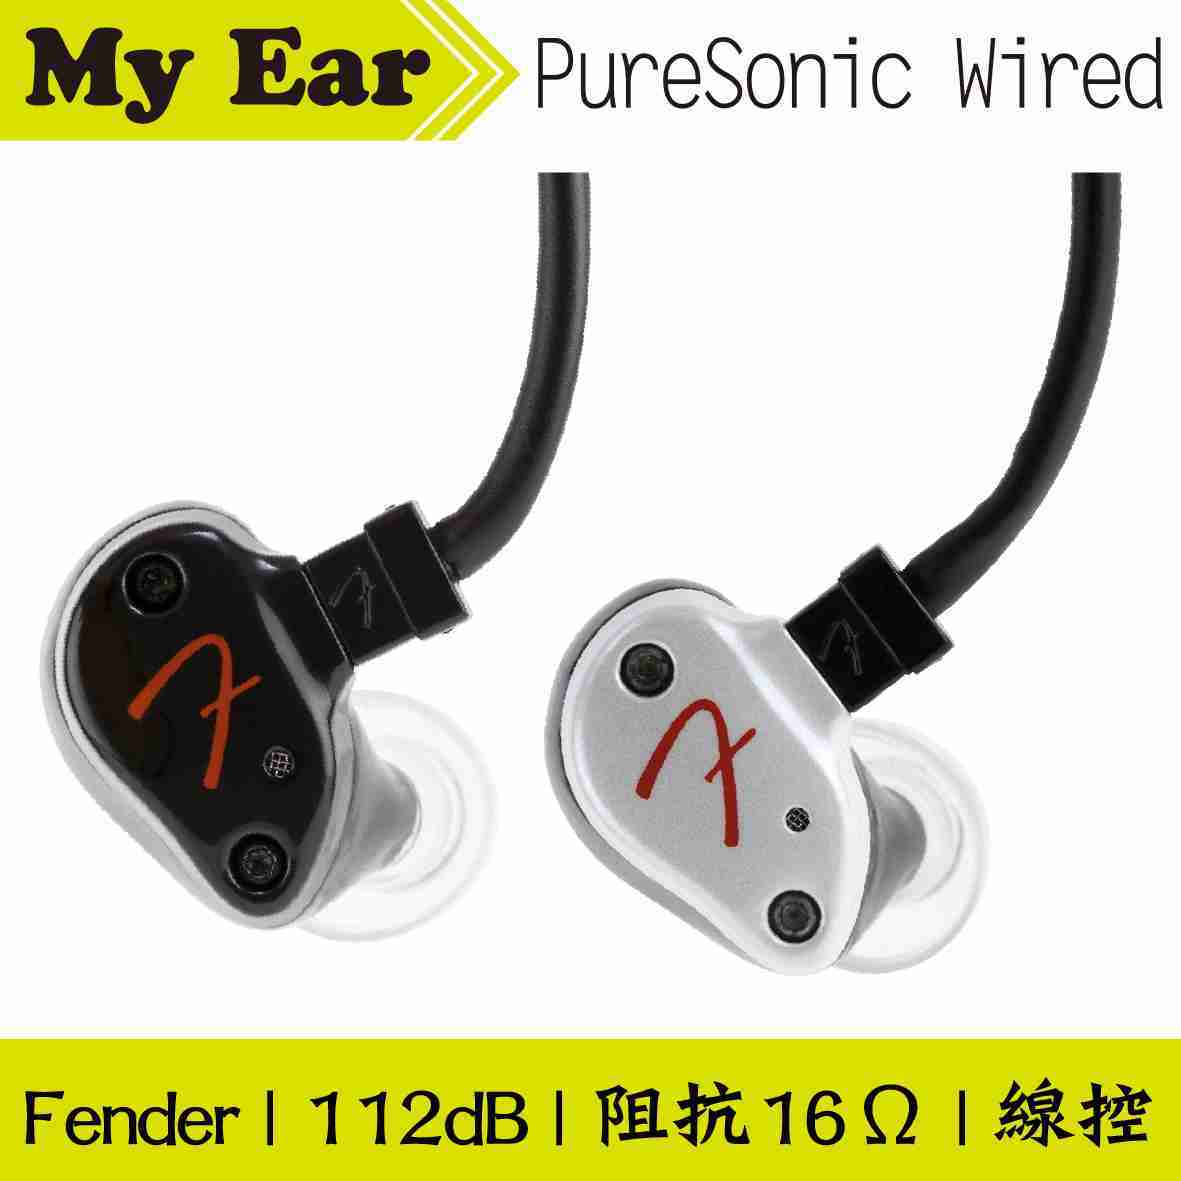 Fender PureSonic Wired 兩色 適用 iOS Android 耳道式耳機 | My Ear耳機專門店